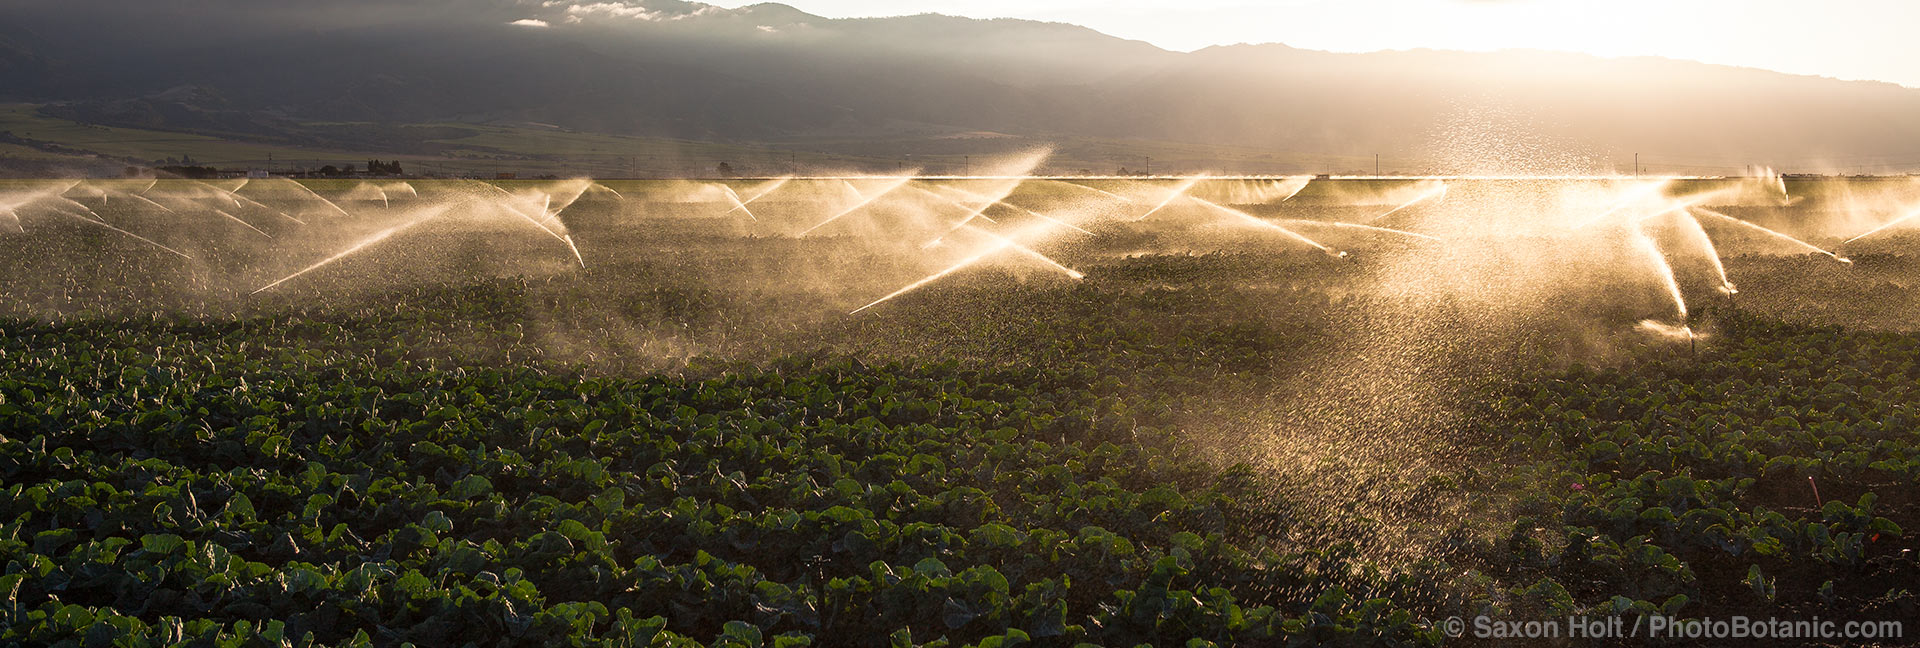 farm irrigation california